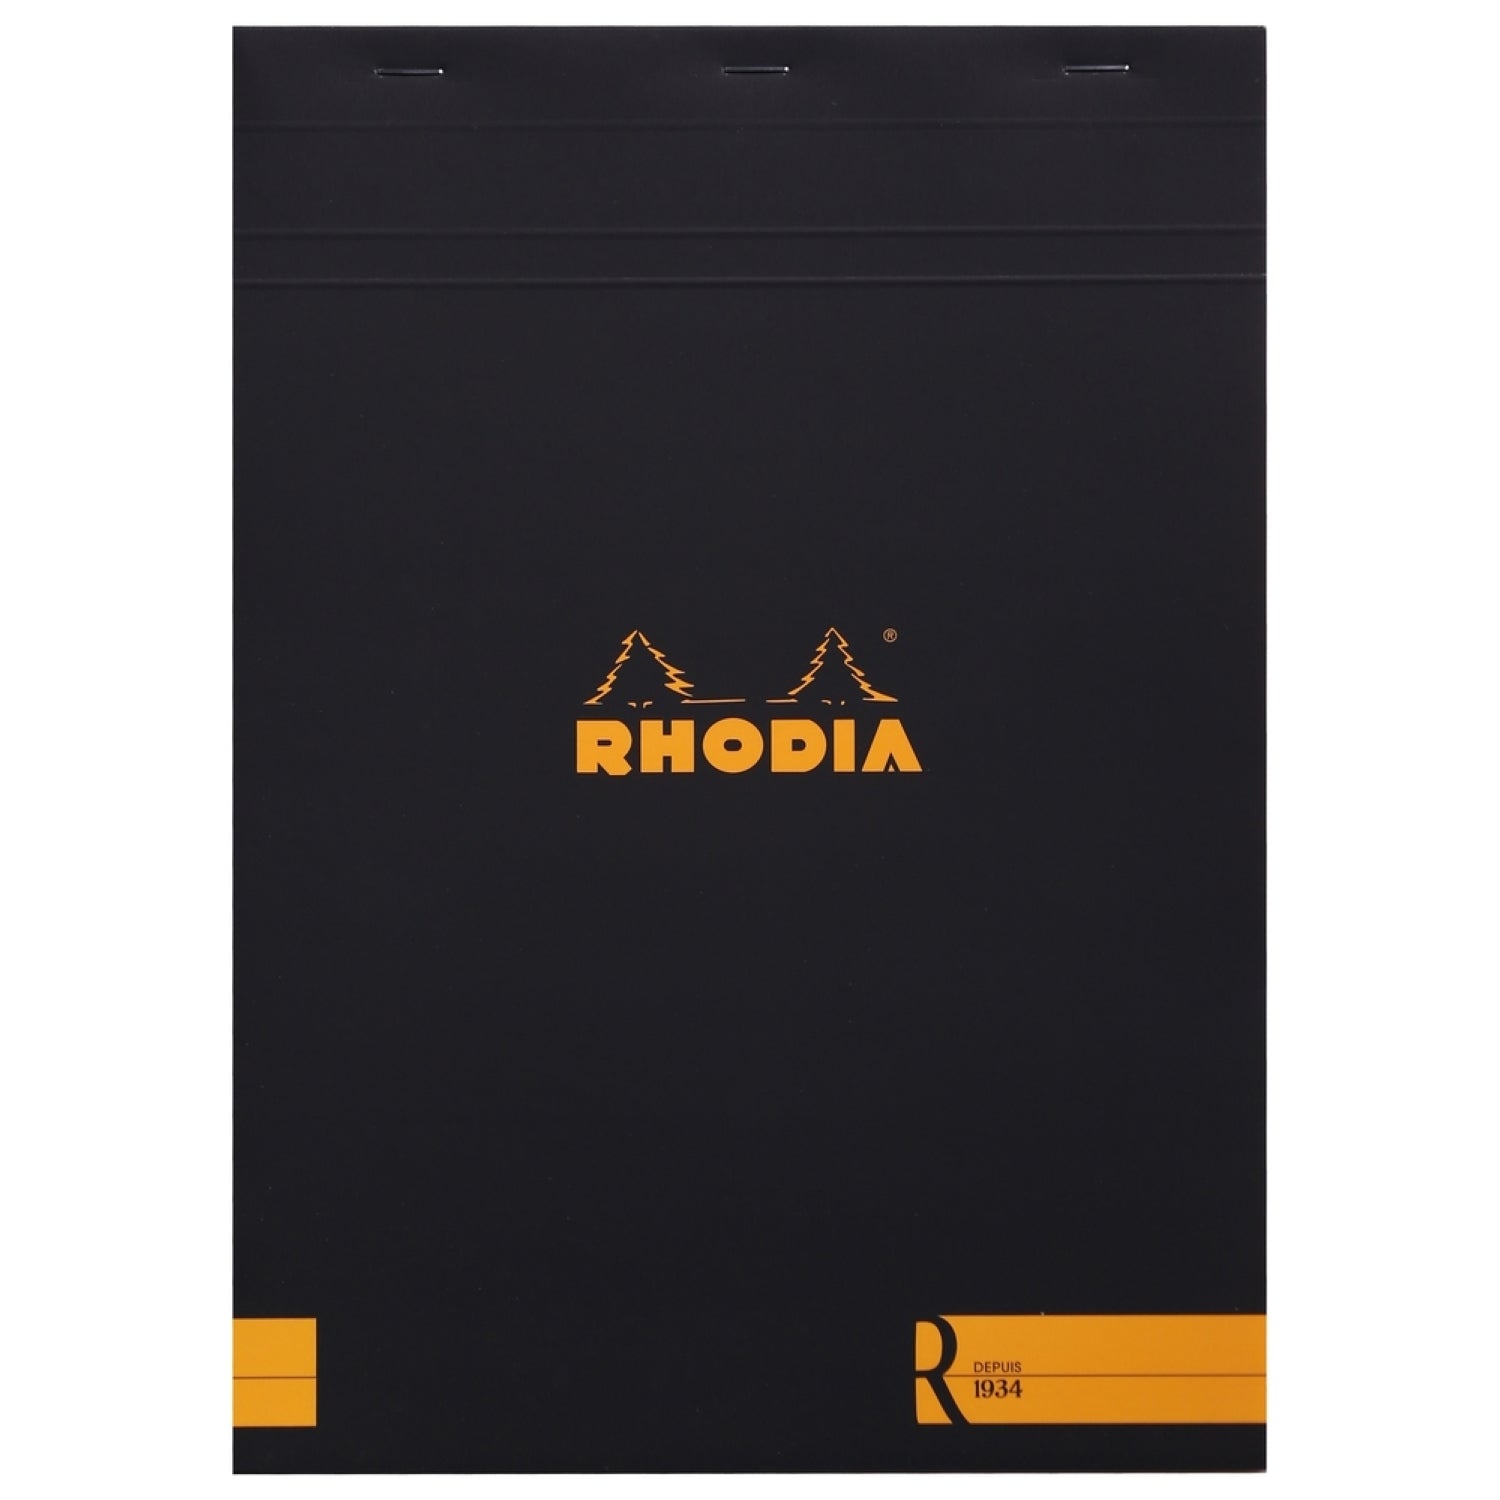 Rhodia Pad #18 R Premium A4 Lined - Black